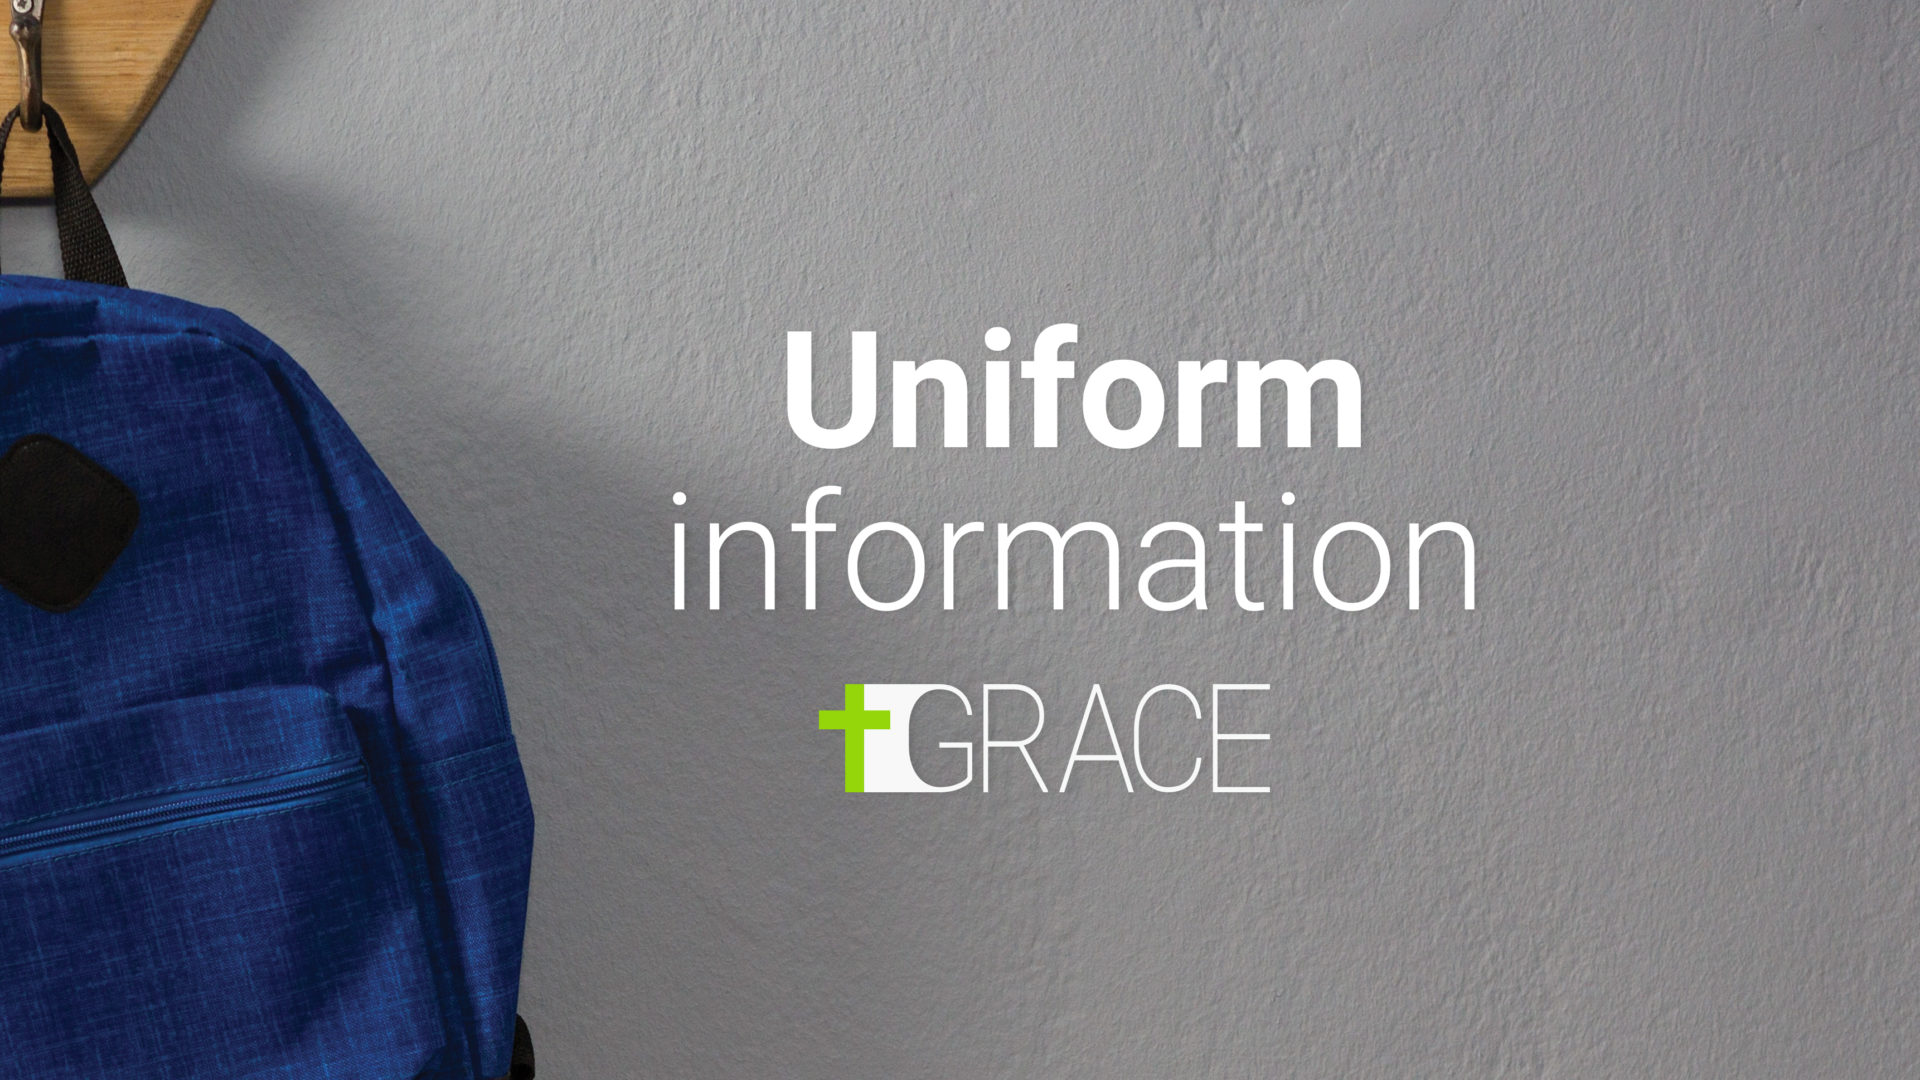 Uniform information